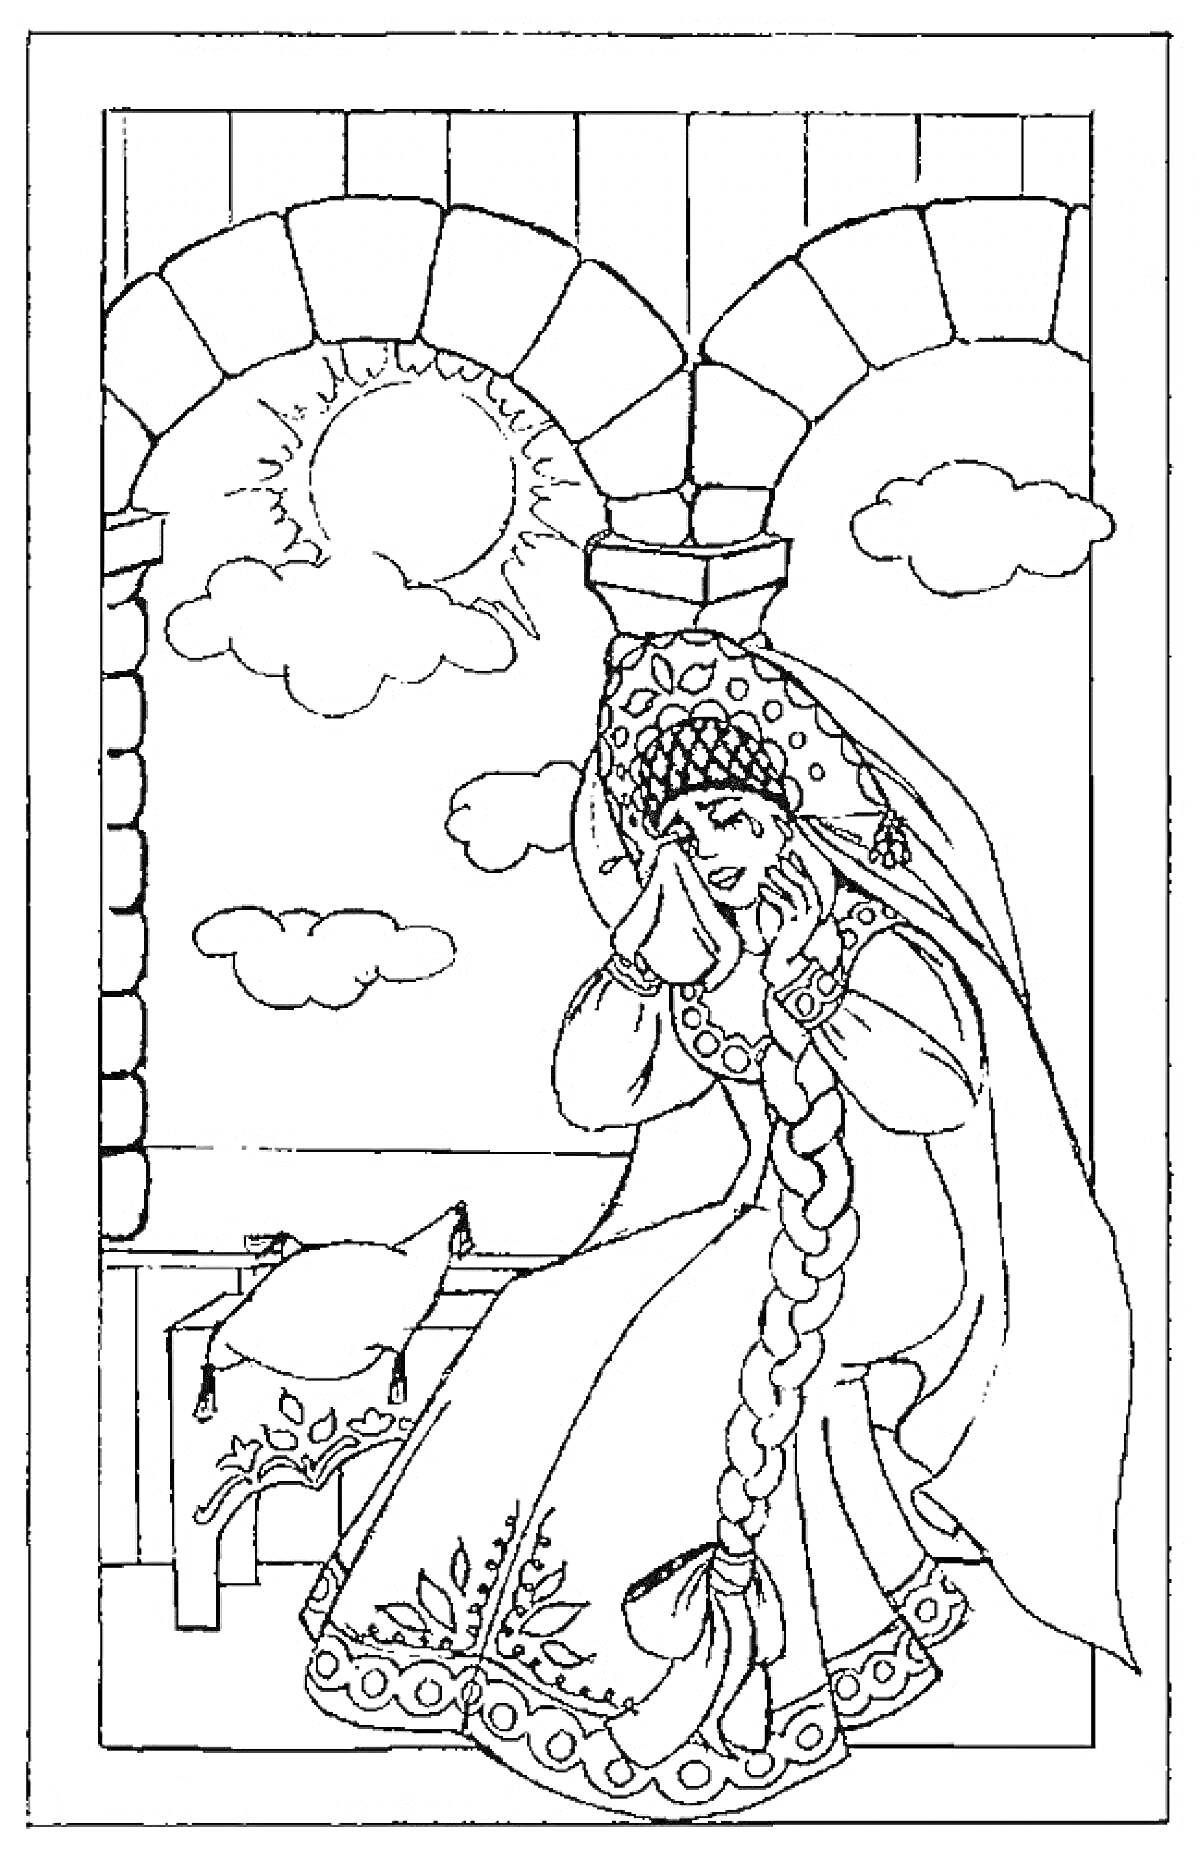 Раскраска Принцесса с длинной косой, сидящая у окна с арками, на заднем плане солнце и облака.